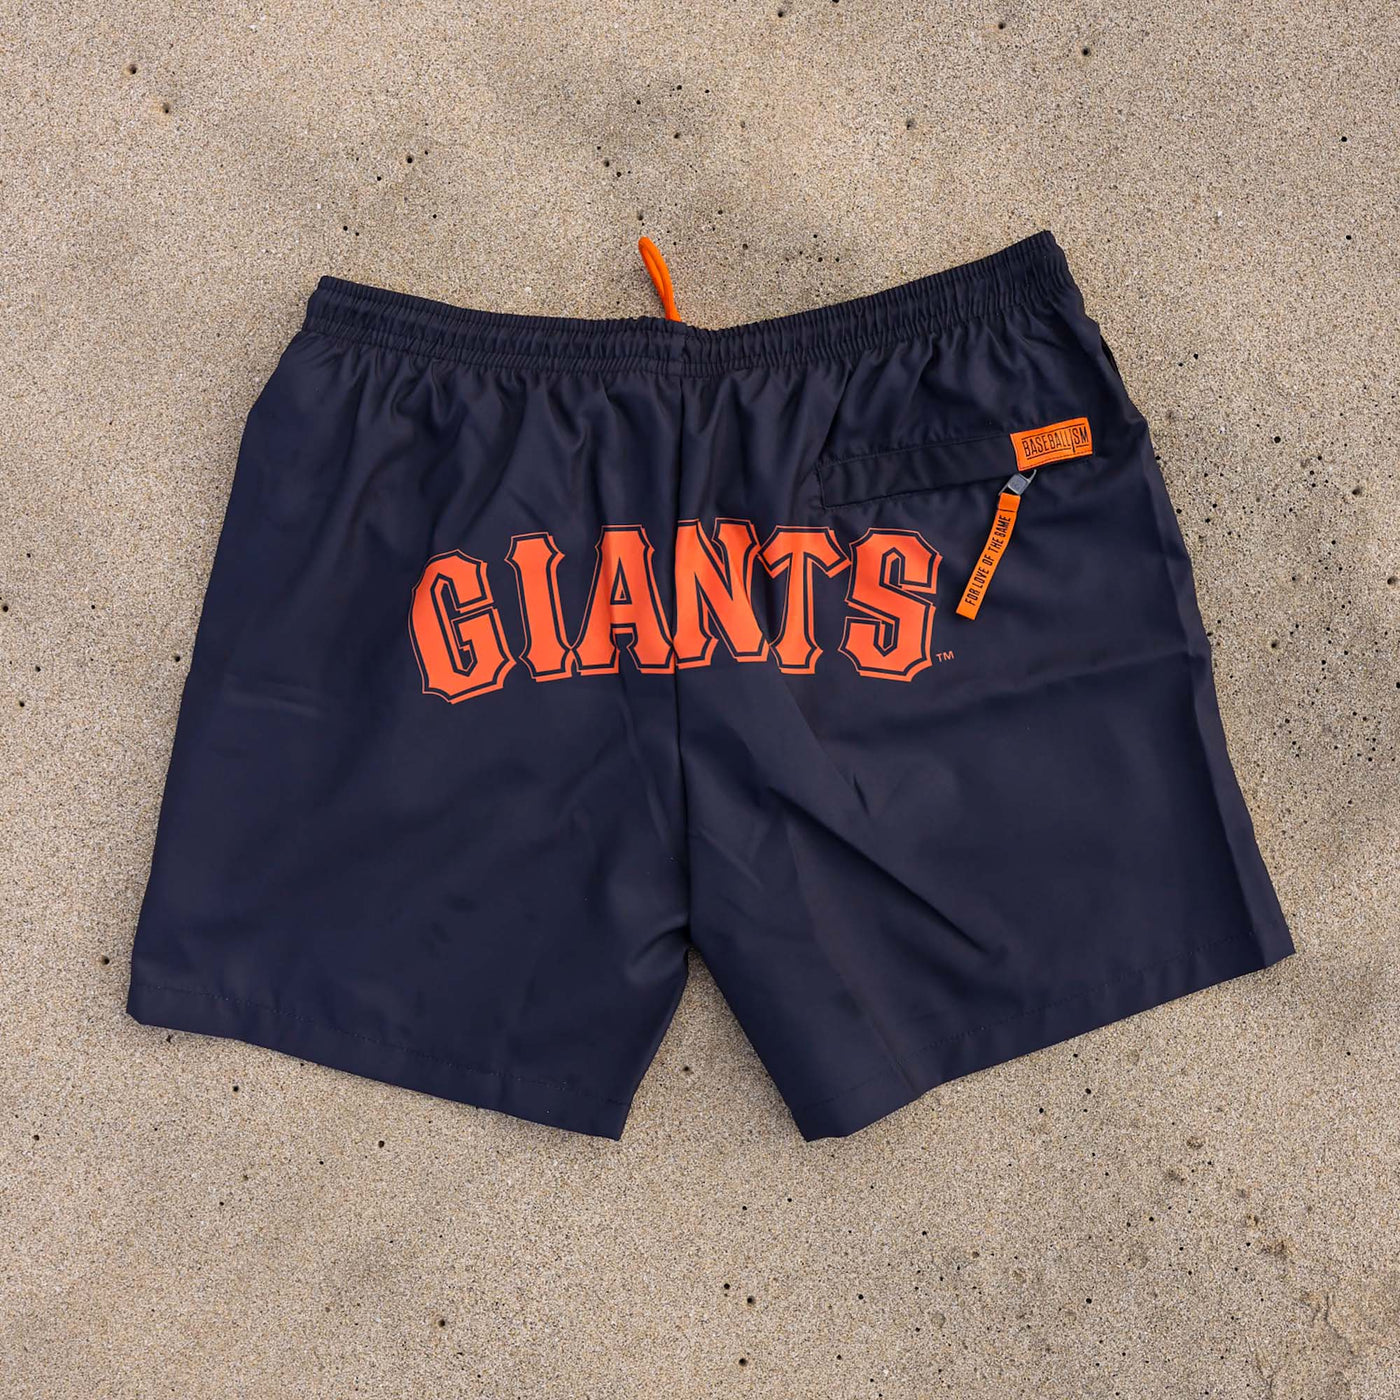 Cali Bear Trunks - San Francisco Giants